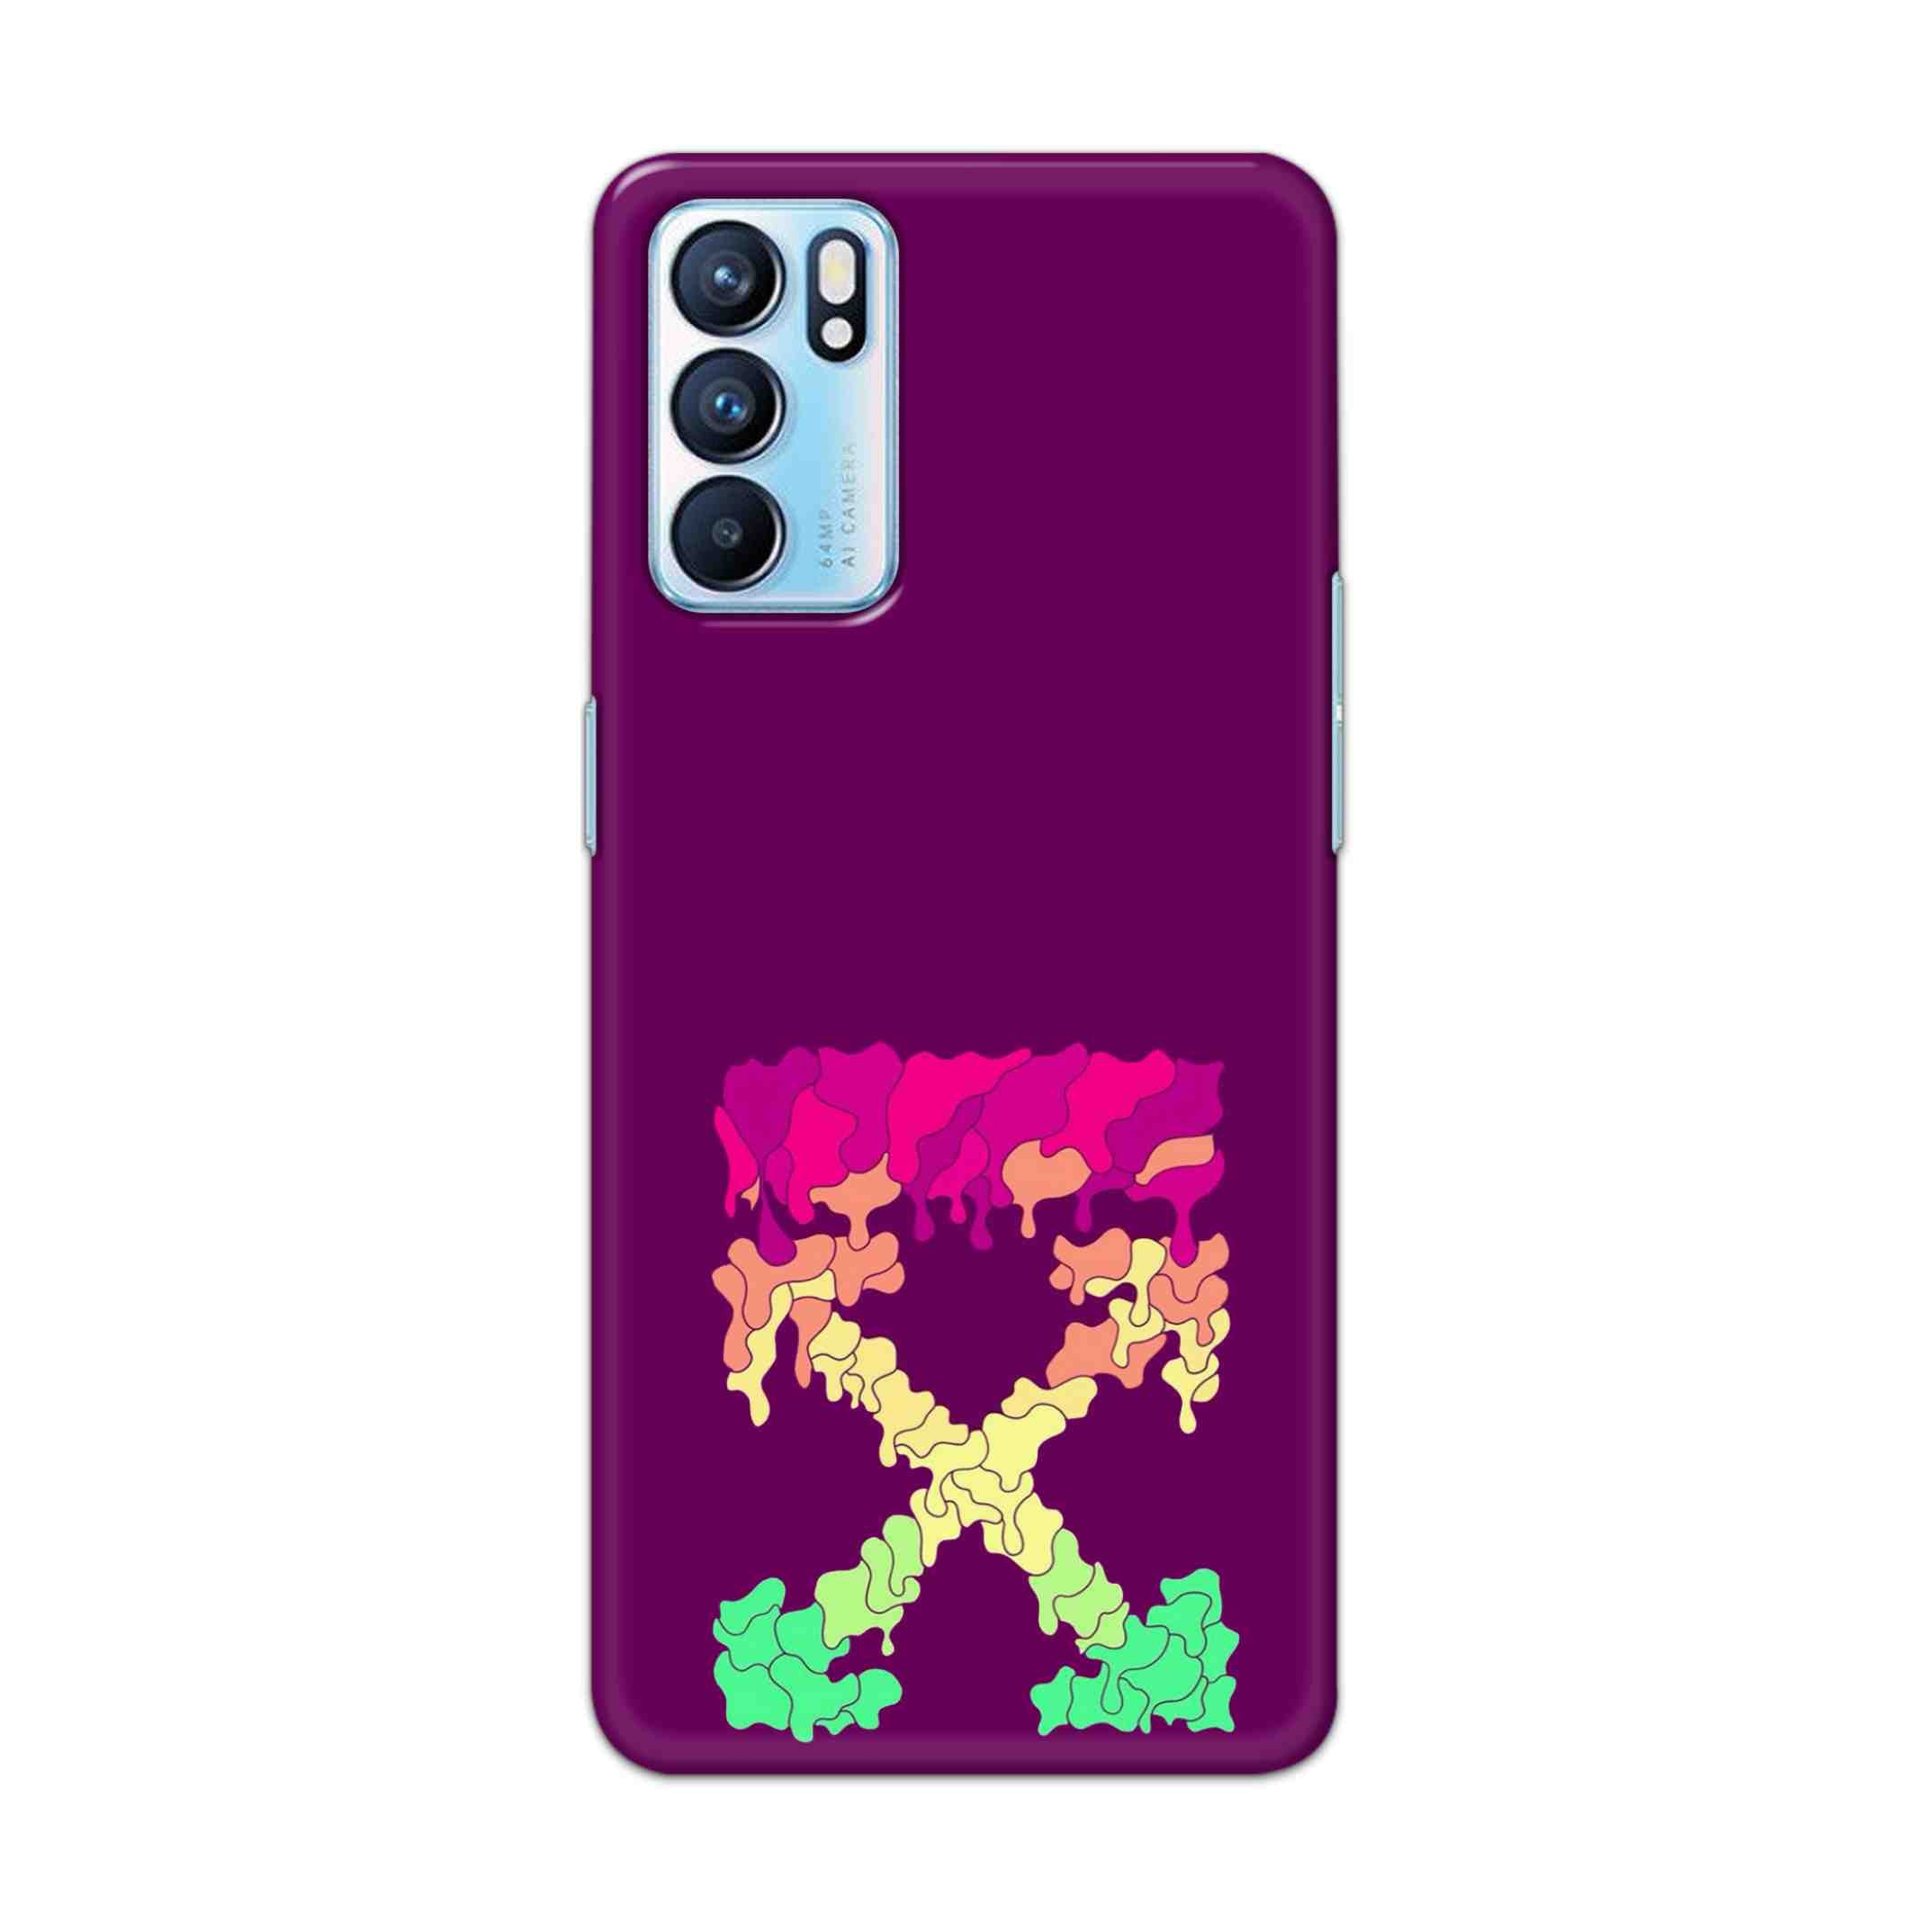 Buy X.O Hard Back Mobile Phone Case Cover For OPPO RENO 6 5G Online